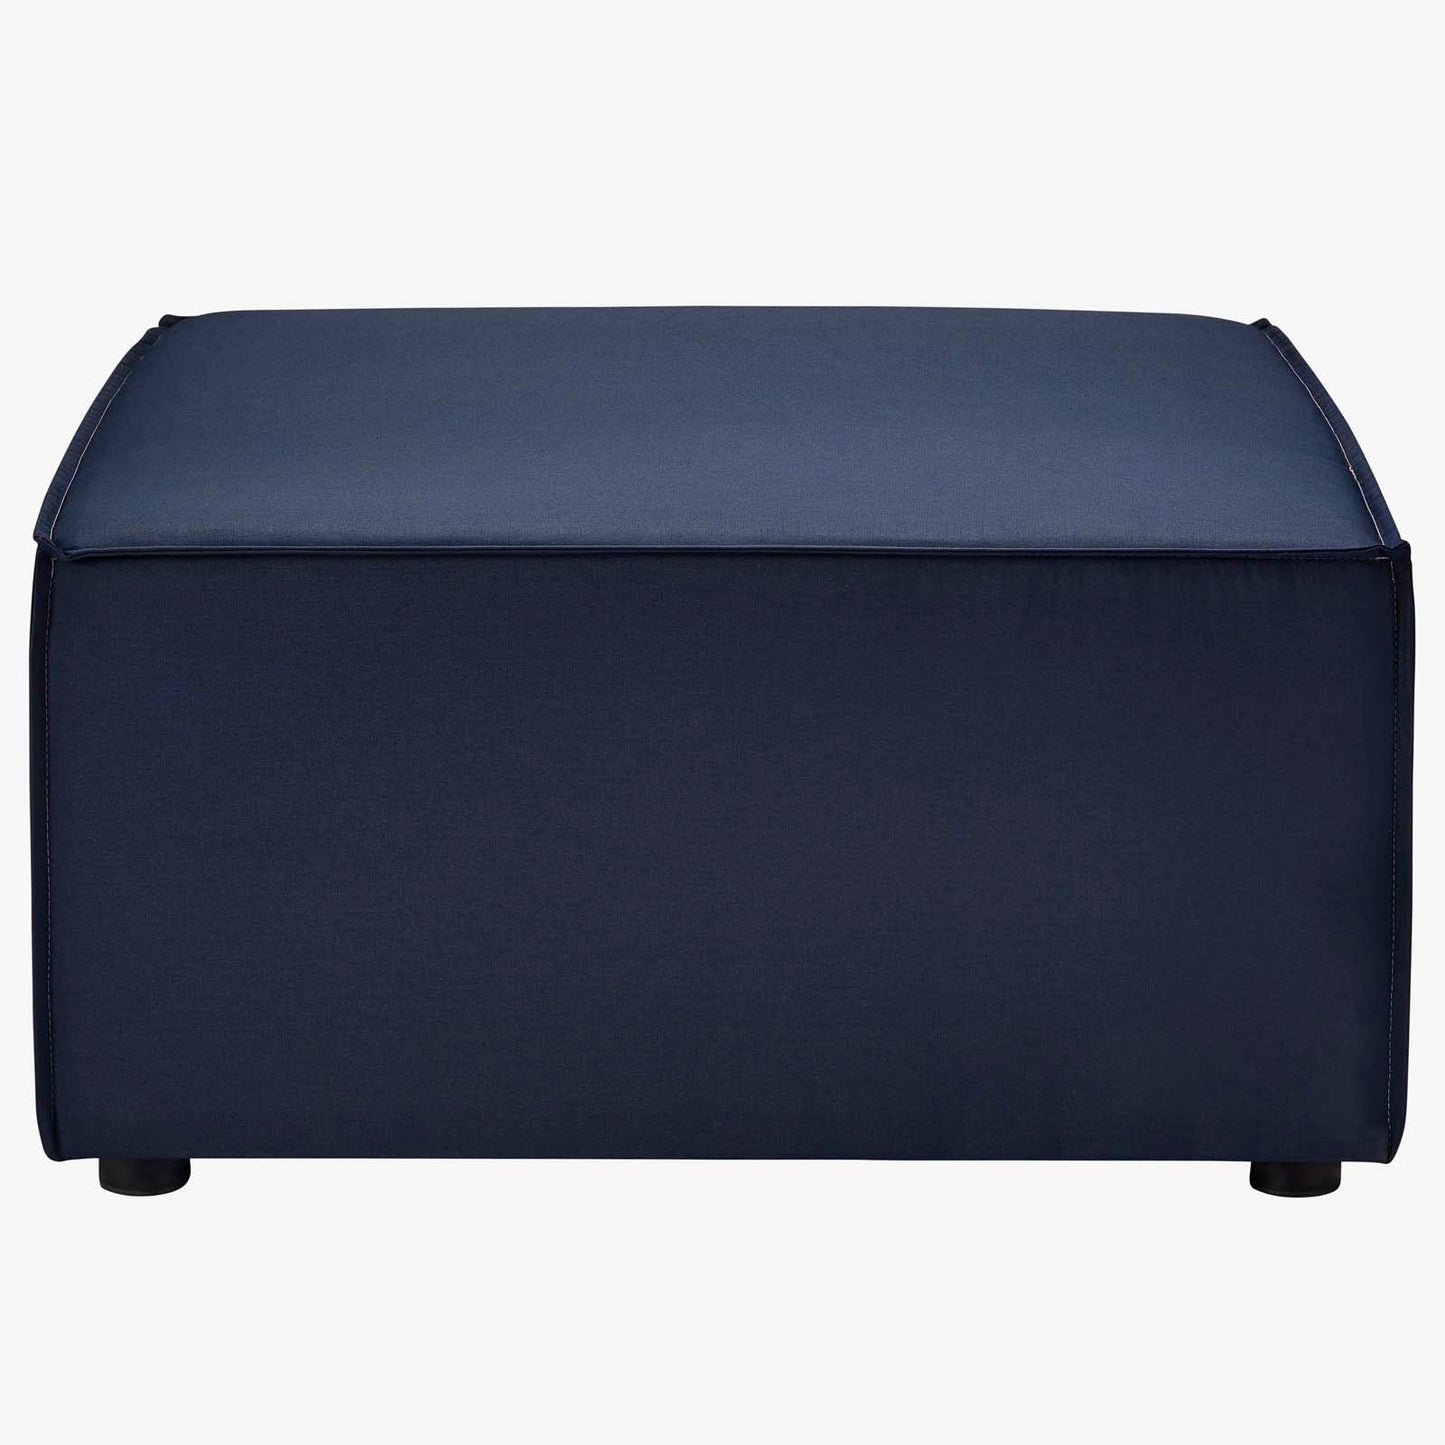 Saybrook Outdoor Patio Upholstered 5-Piece Sectional Sofa Navy EEI-4382-NAV